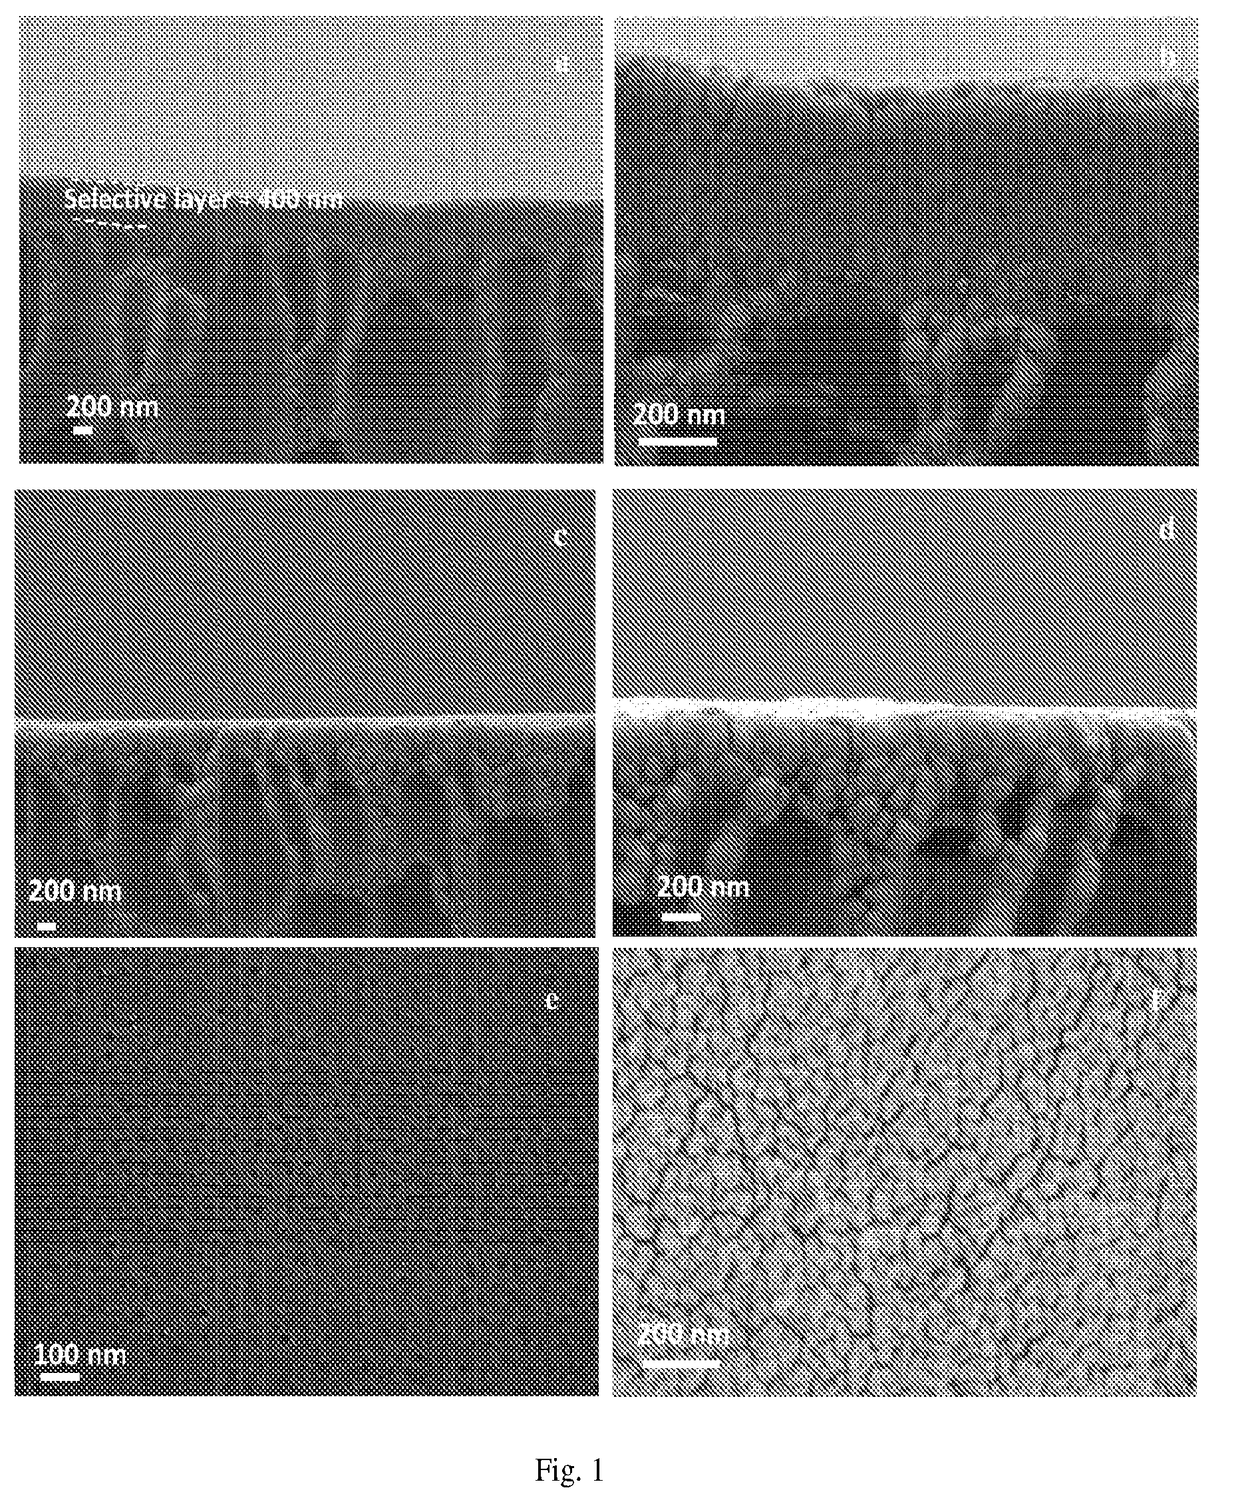 Two-layer nanofiltration membranes